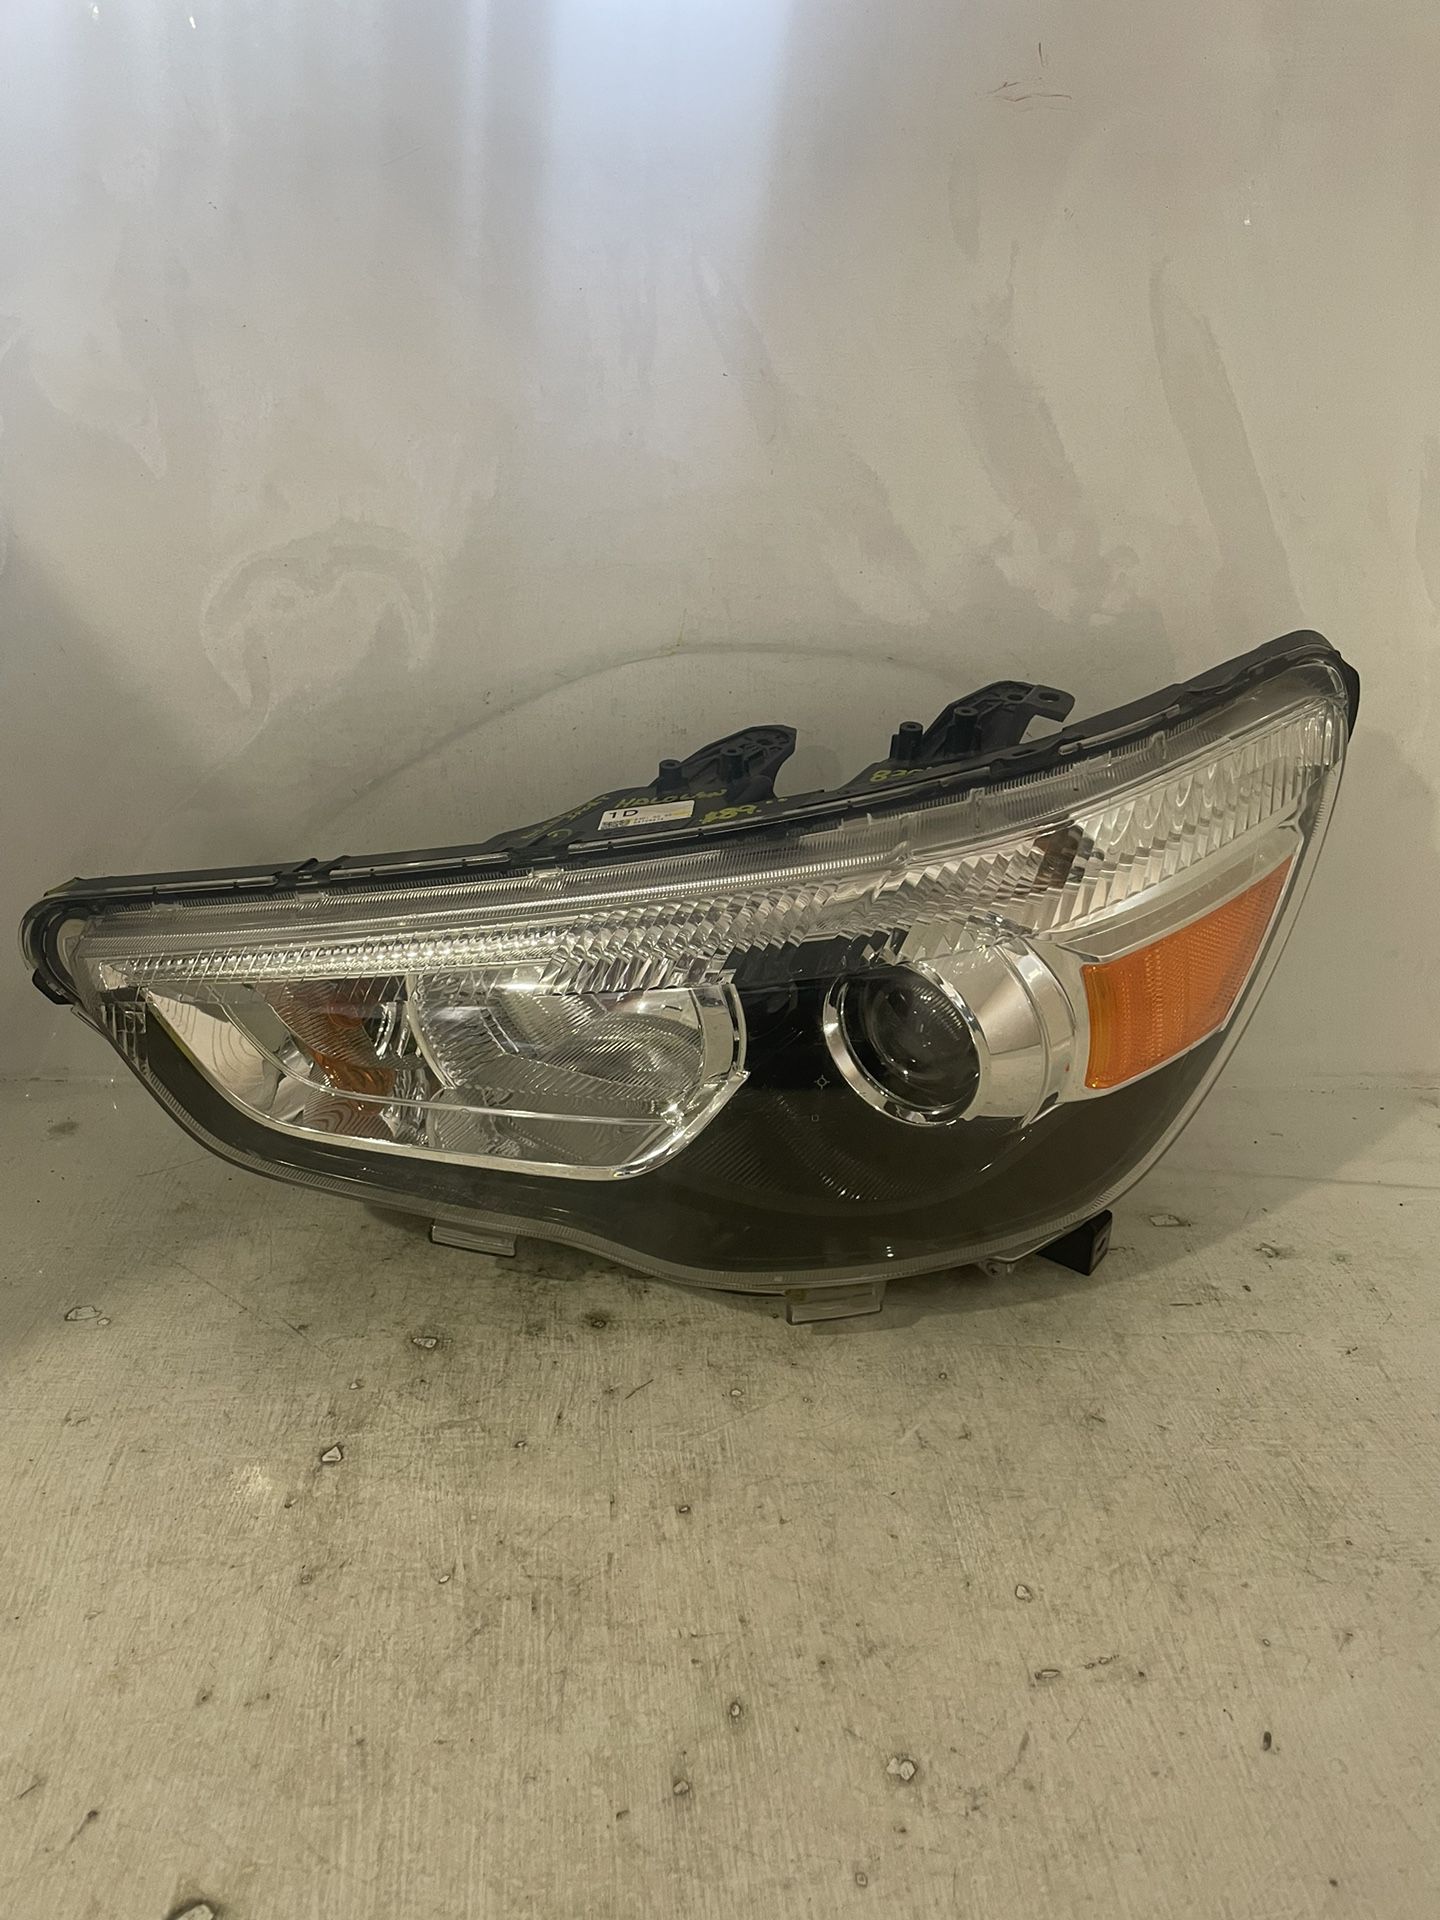 Mitsubishi outlander sport headlight